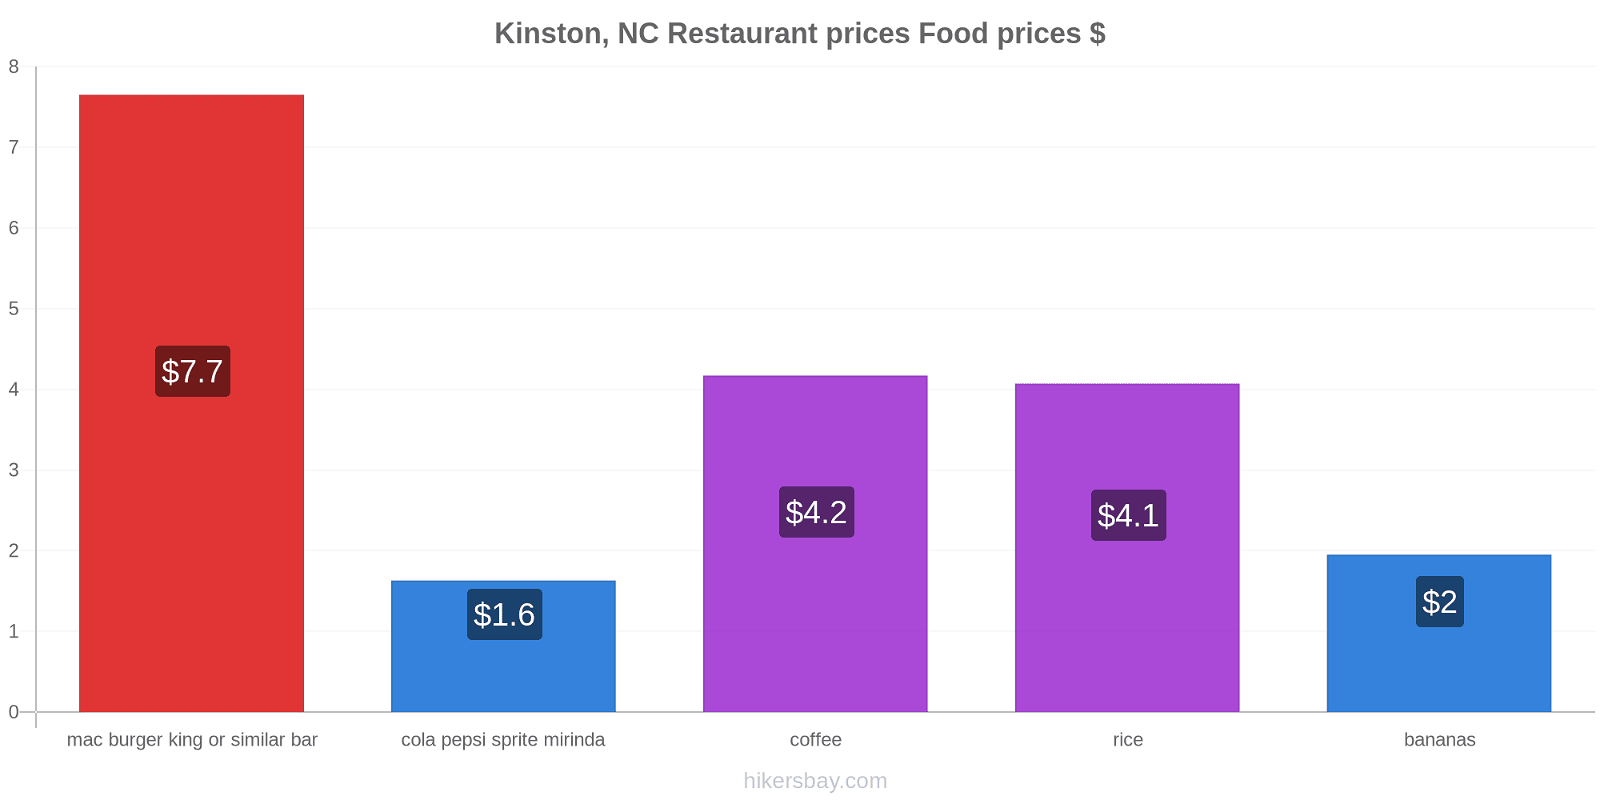 Kinston, NC price changes hikersbay.com